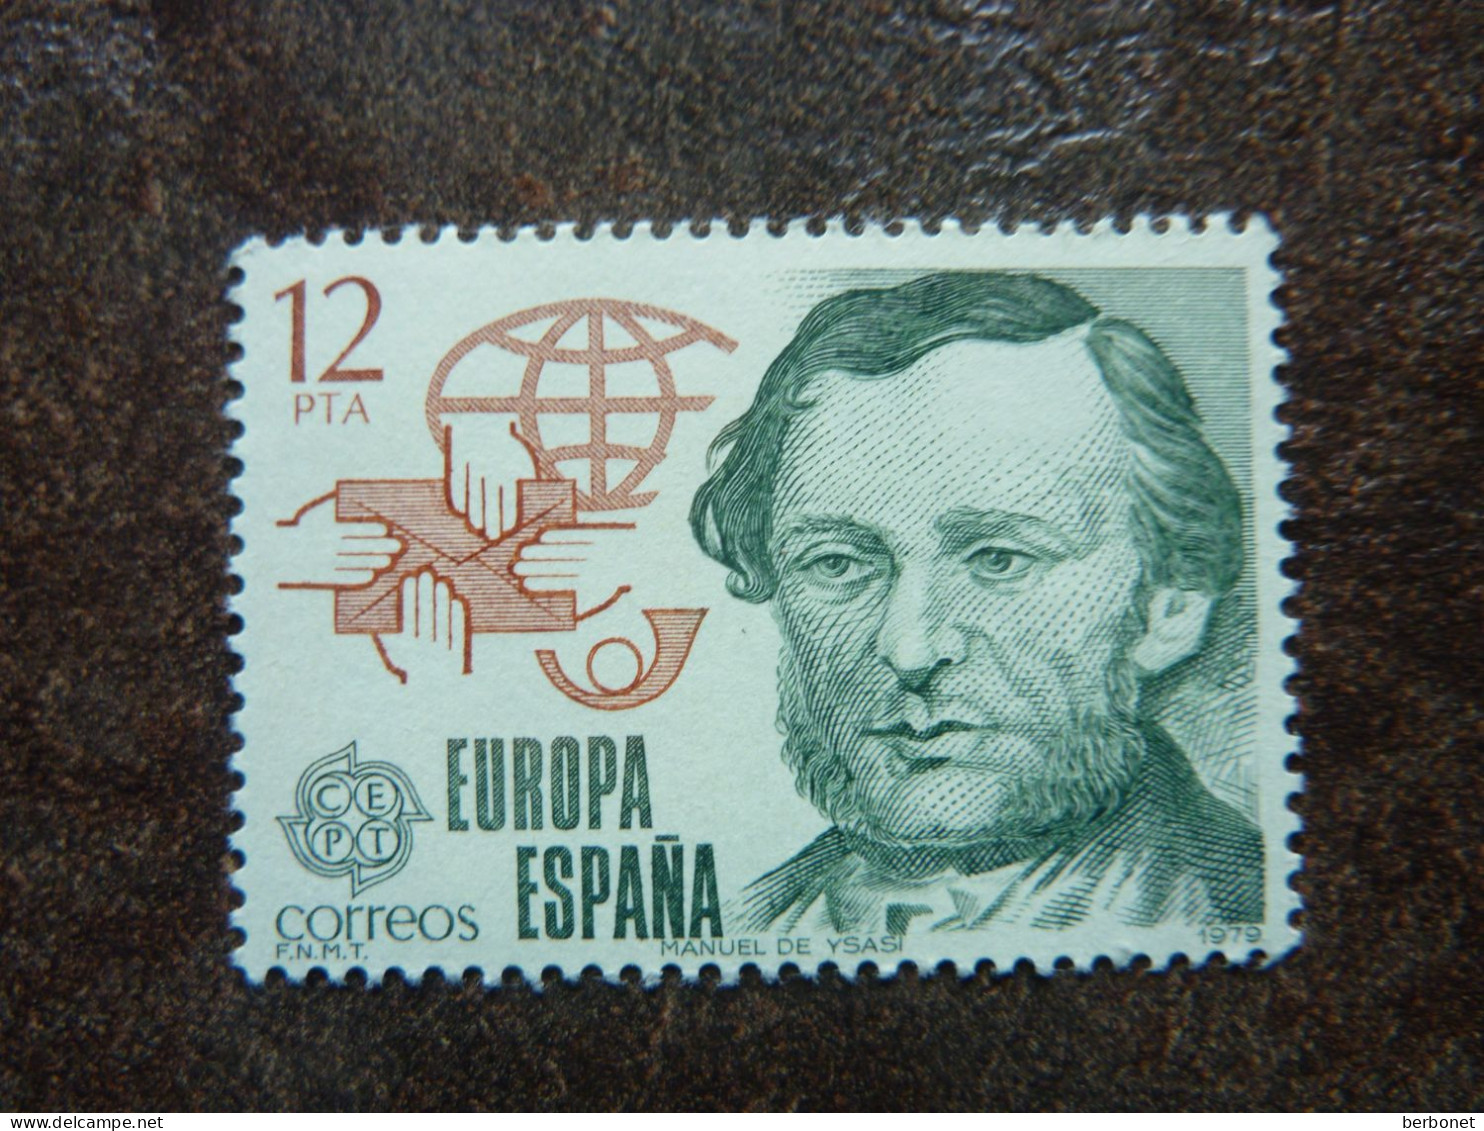 1979  EUROPA   Manuel De Ysasi   ** MNH - Unused Stamps